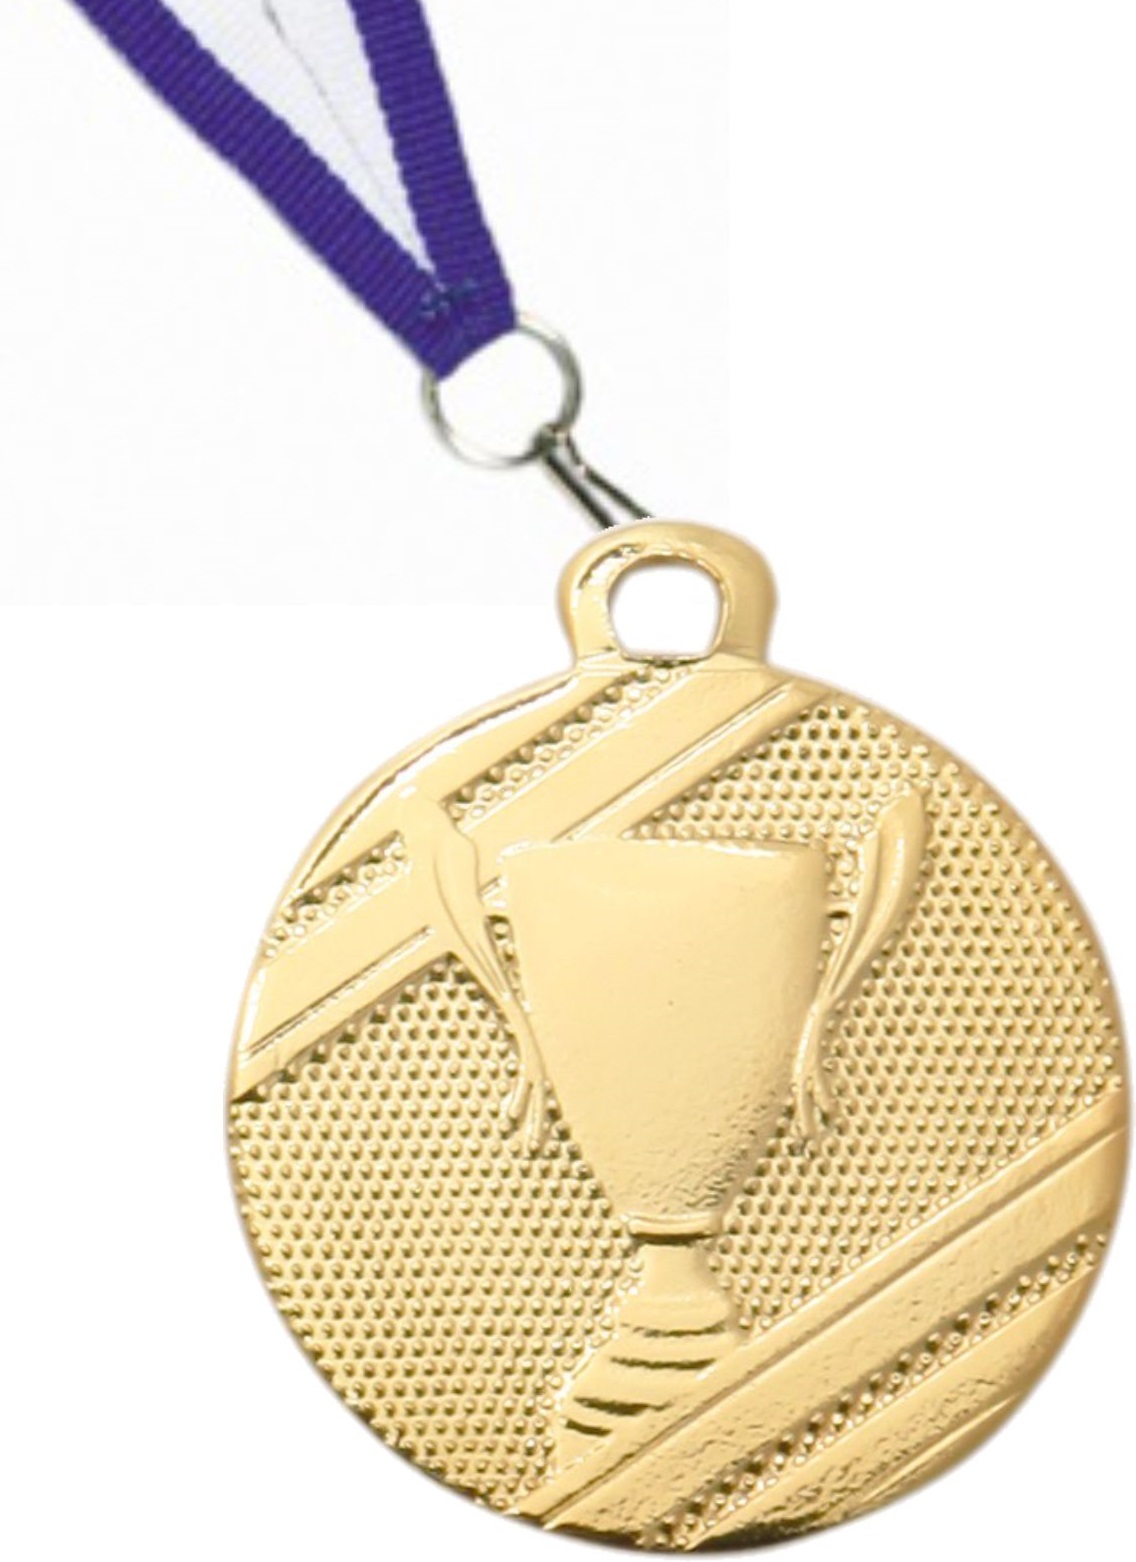 Kleine Sieger-Medaille D106 inkl. Band